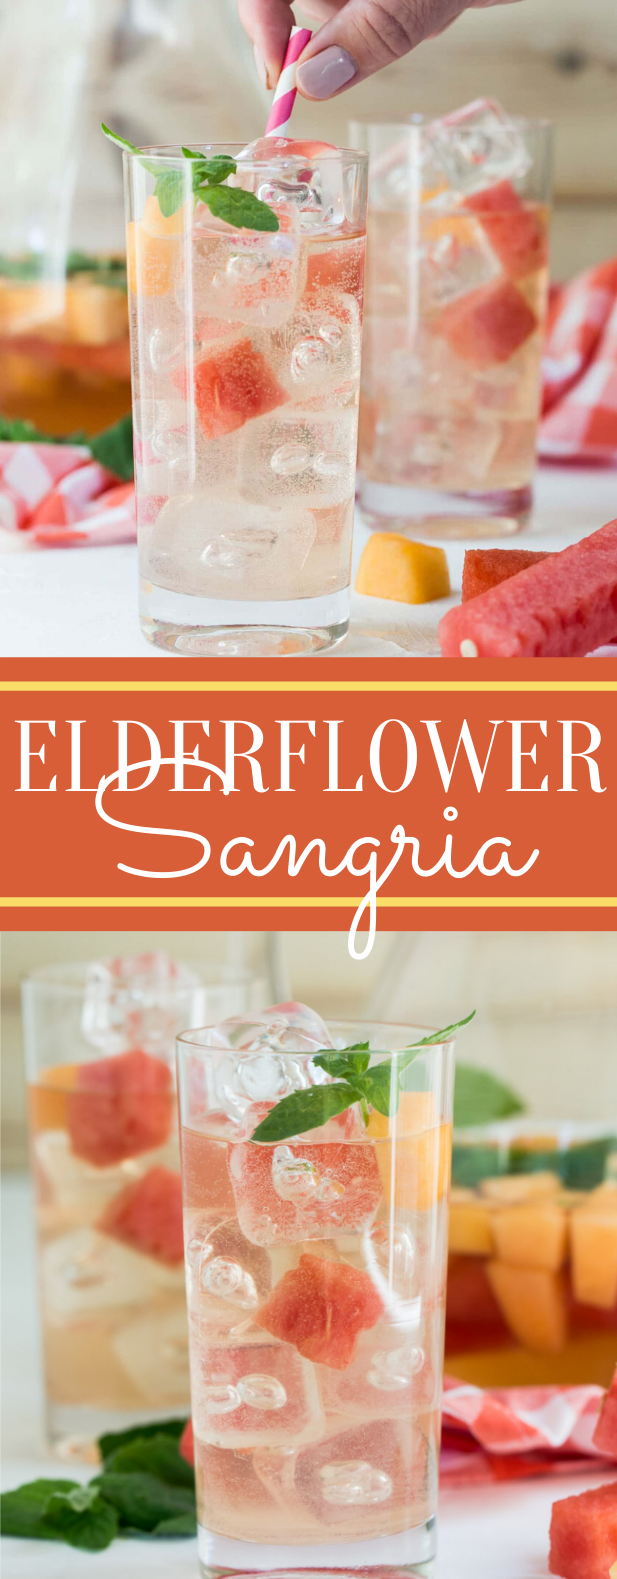 Elderflower Sangria Recipe #drinks #summerdrink #cocktails #sweets #alcohol